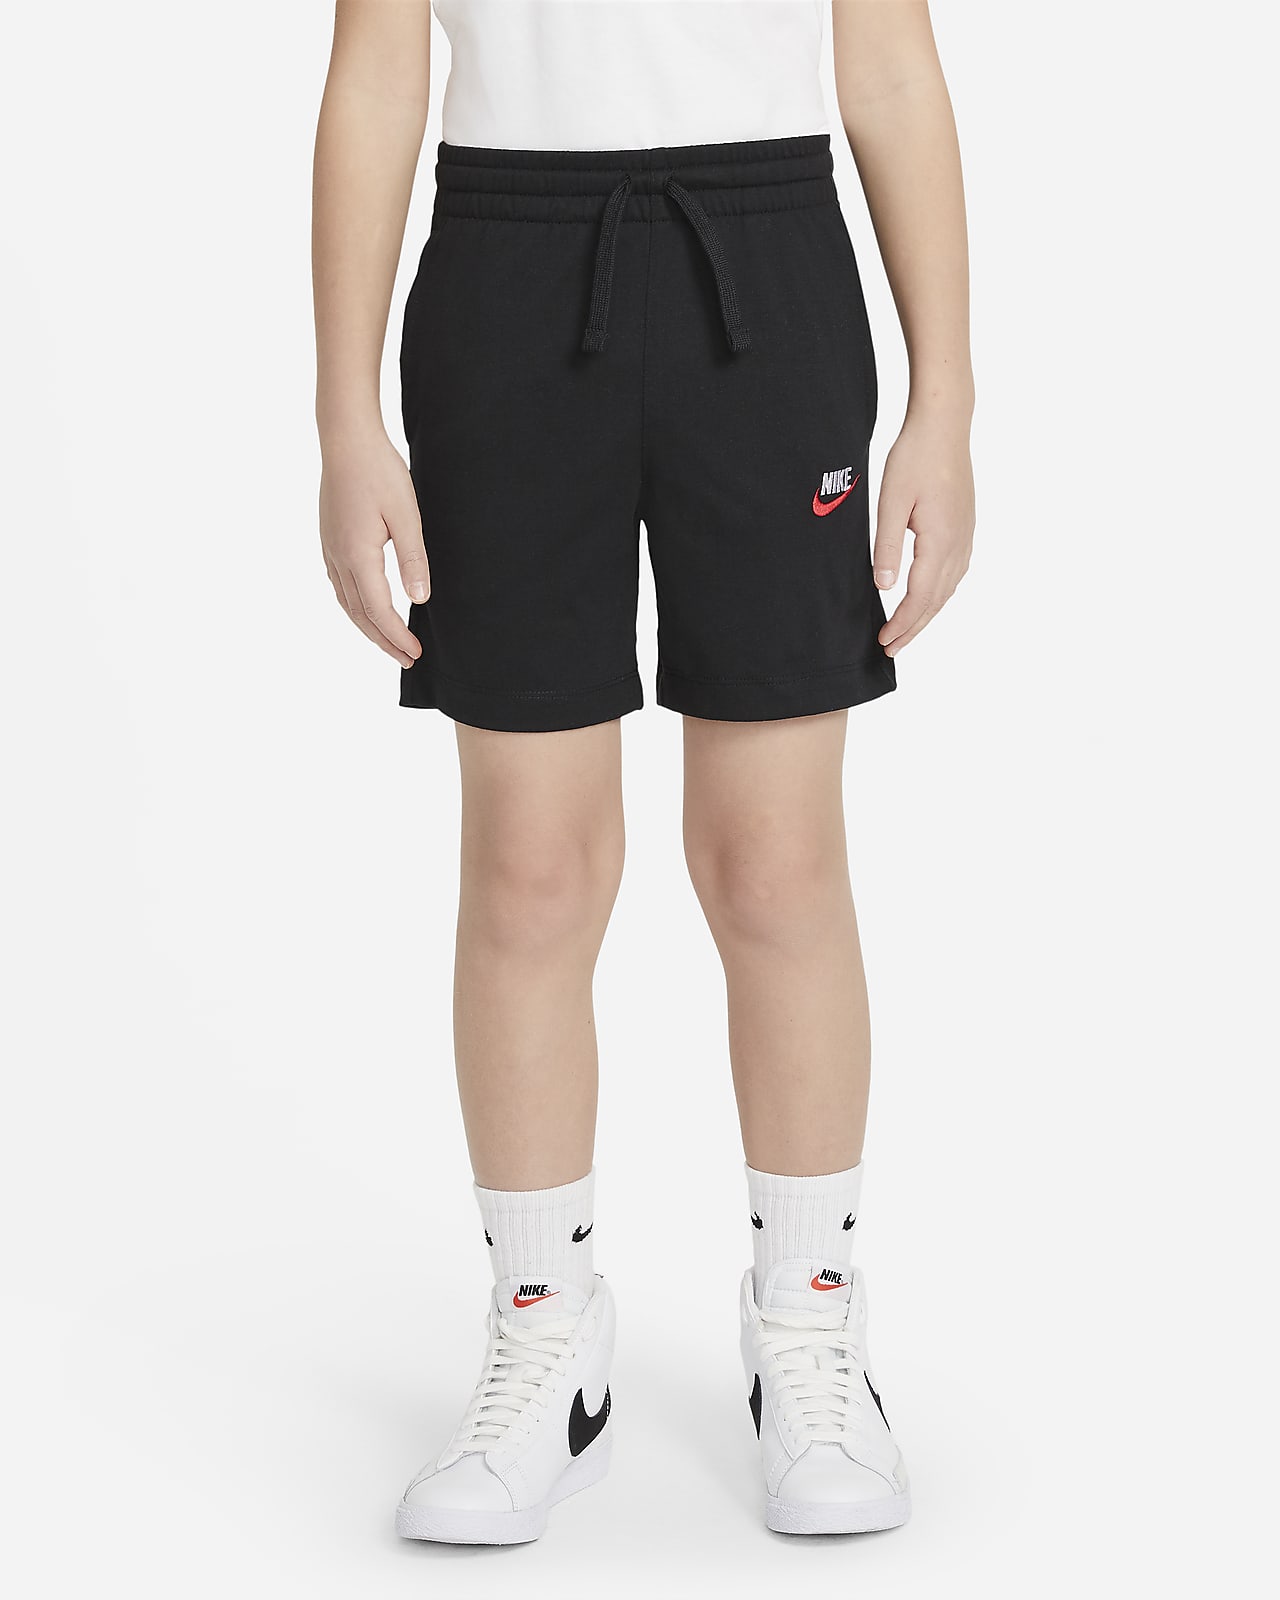 Nike Jersey Older Kids' (Boys') Shorts